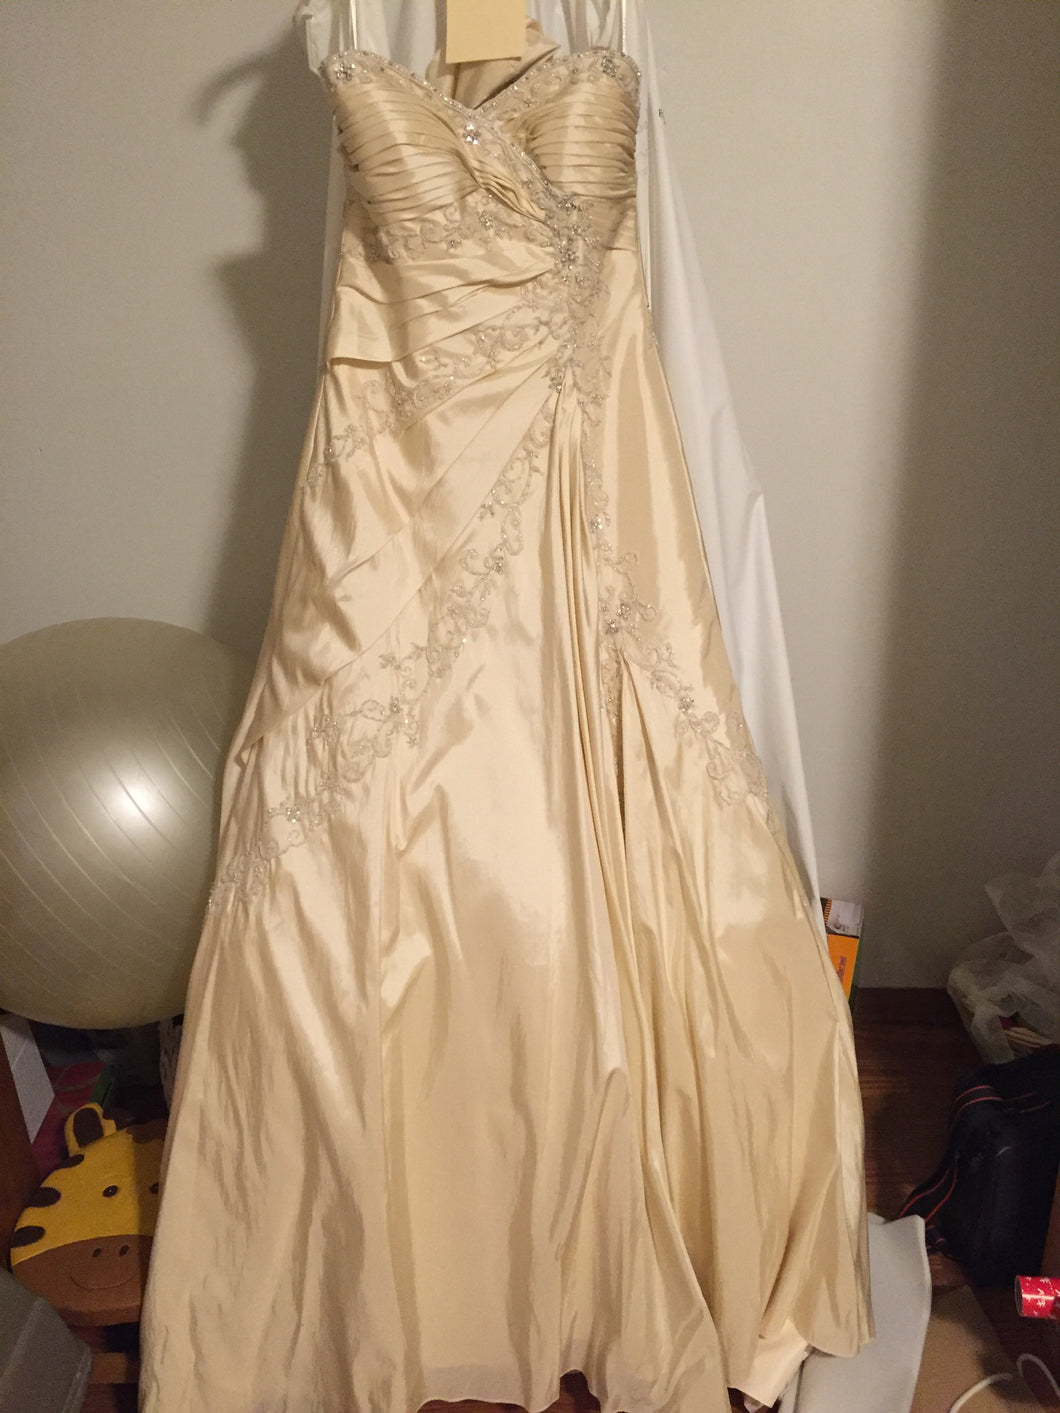 Sophia Tolli 'Olivia' size 8 used wedding dress front view on hanger